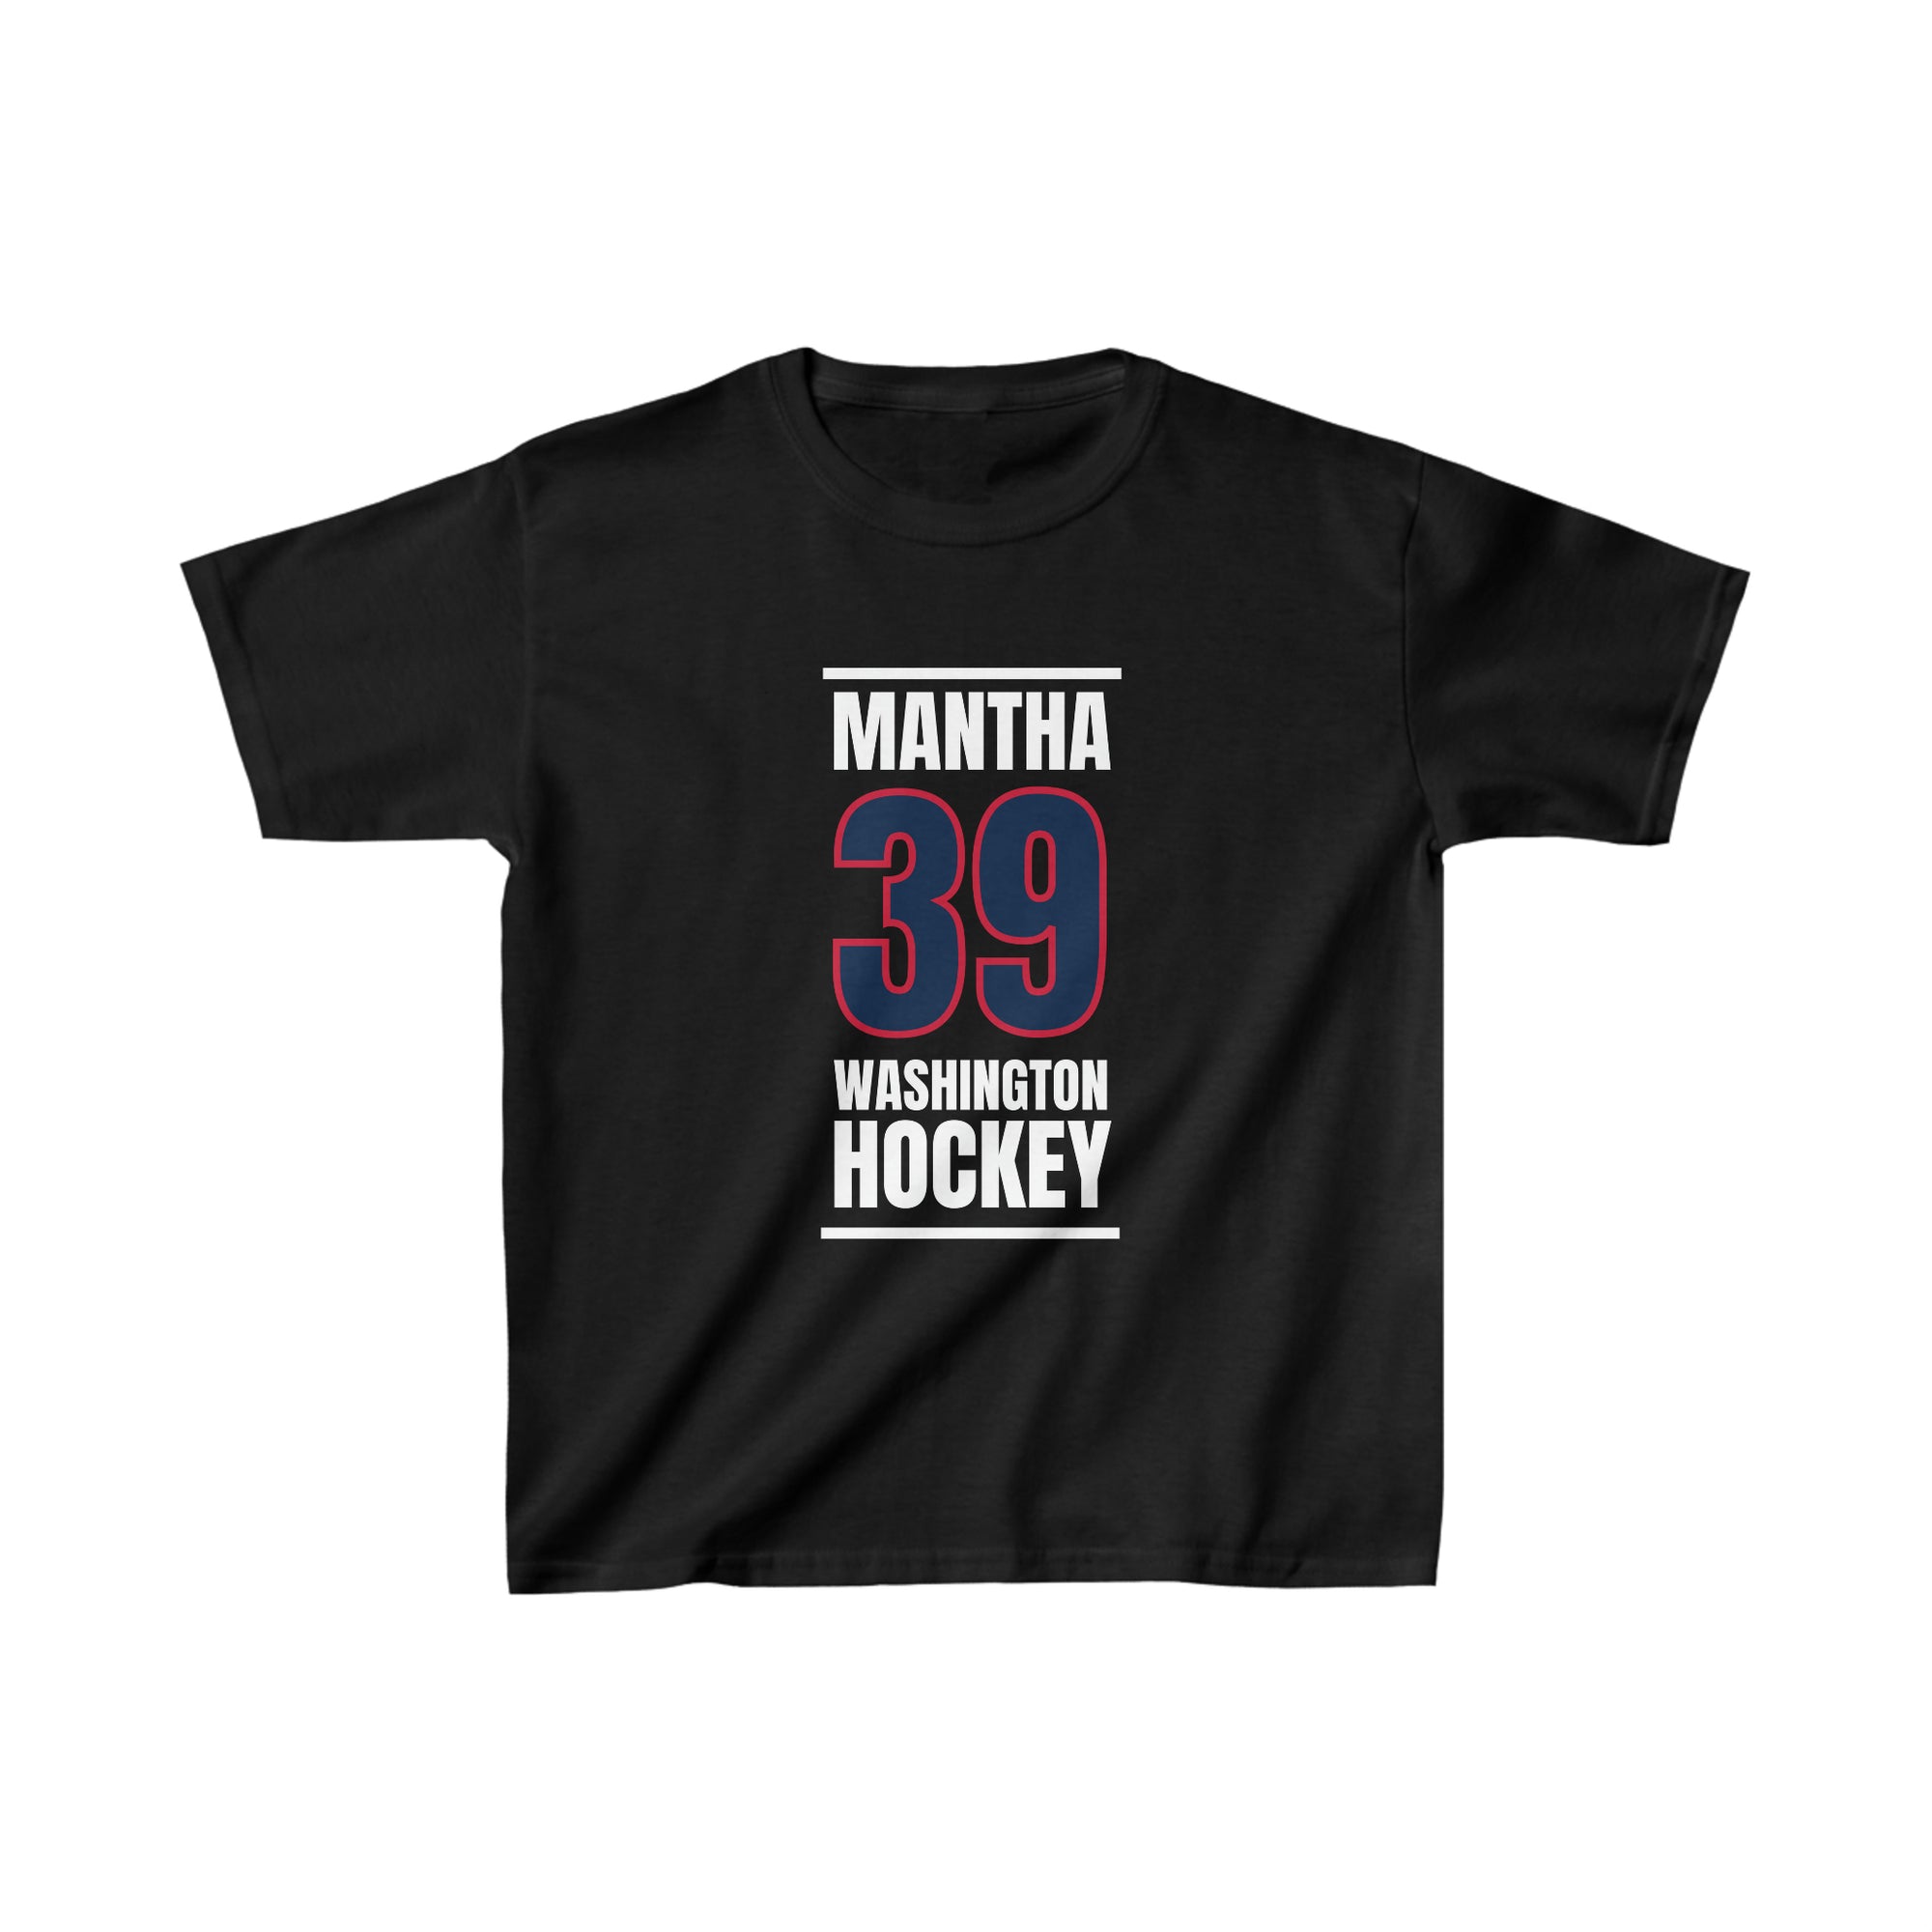 Mantha 39 Washington Hockey Navy Vertical Design Kids Tee